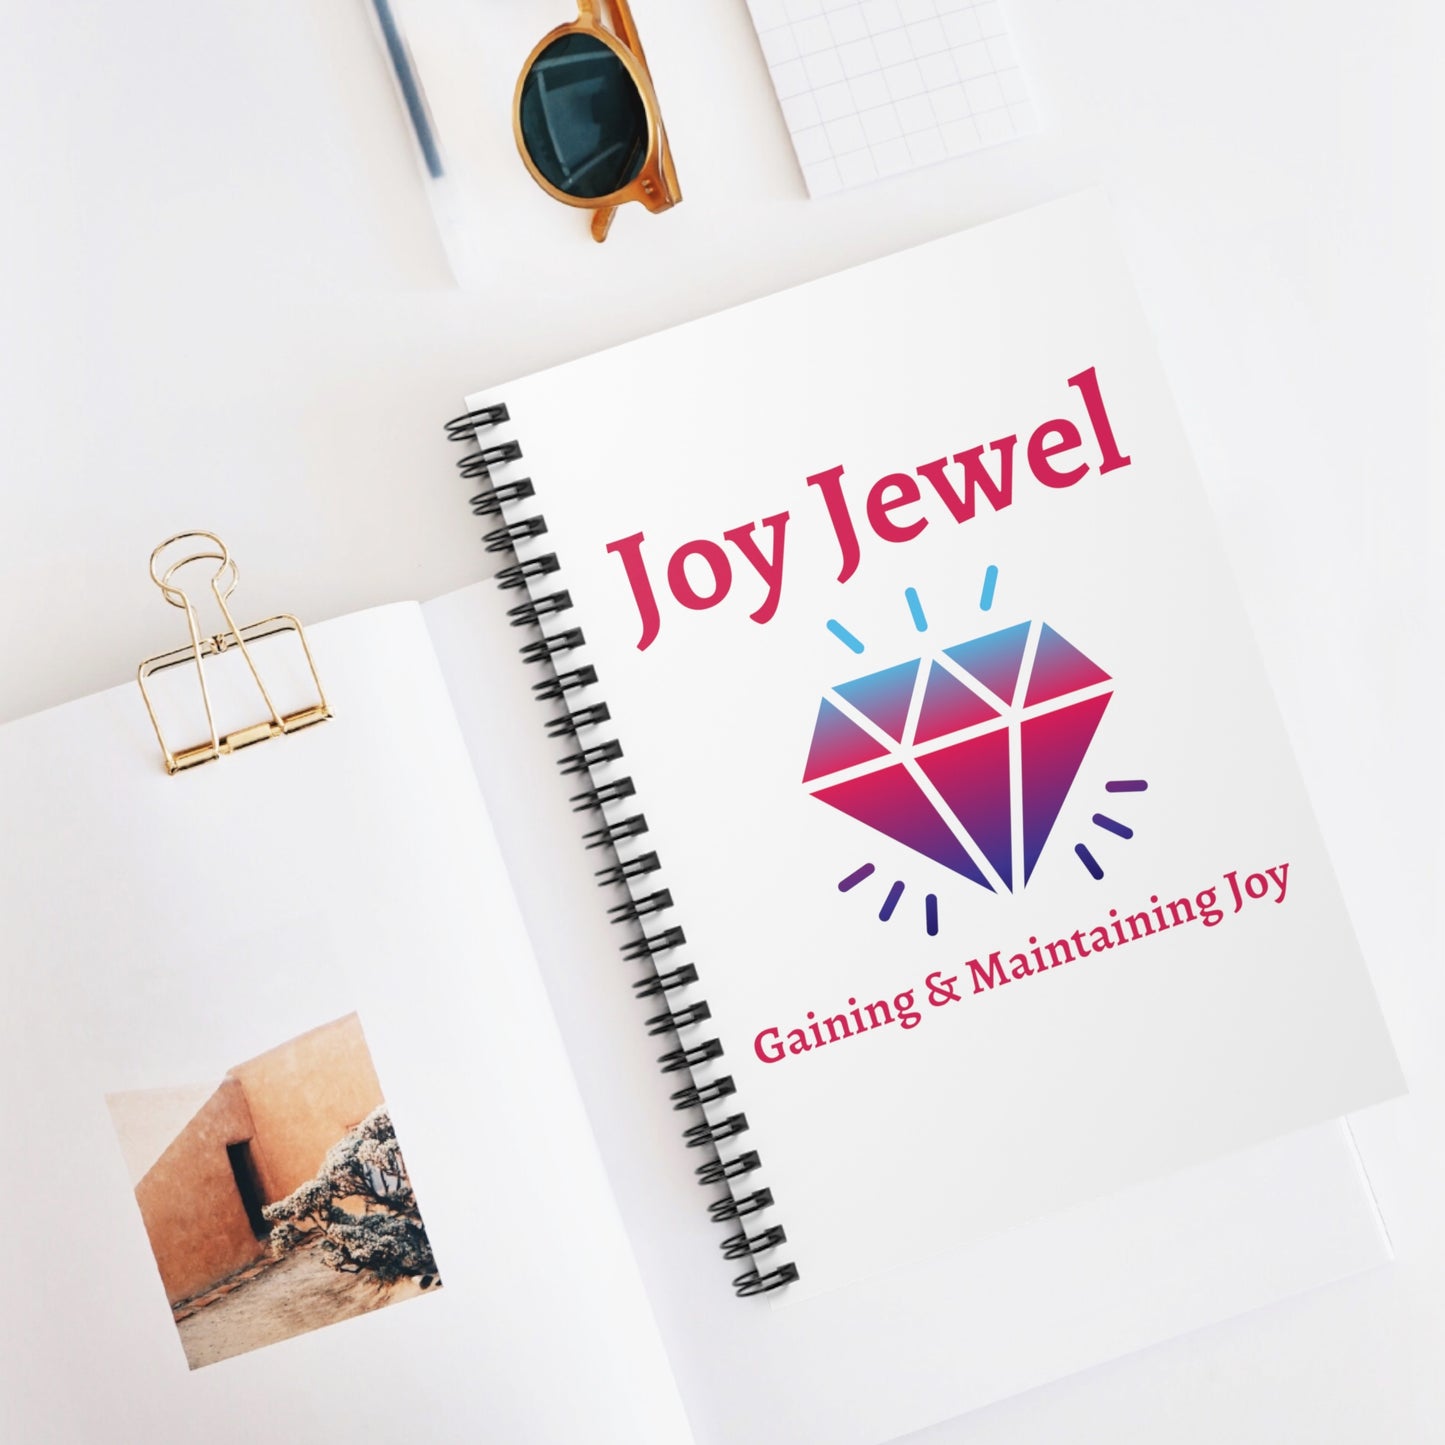 Joy Jewel Spiral Notebook - Ruled Line